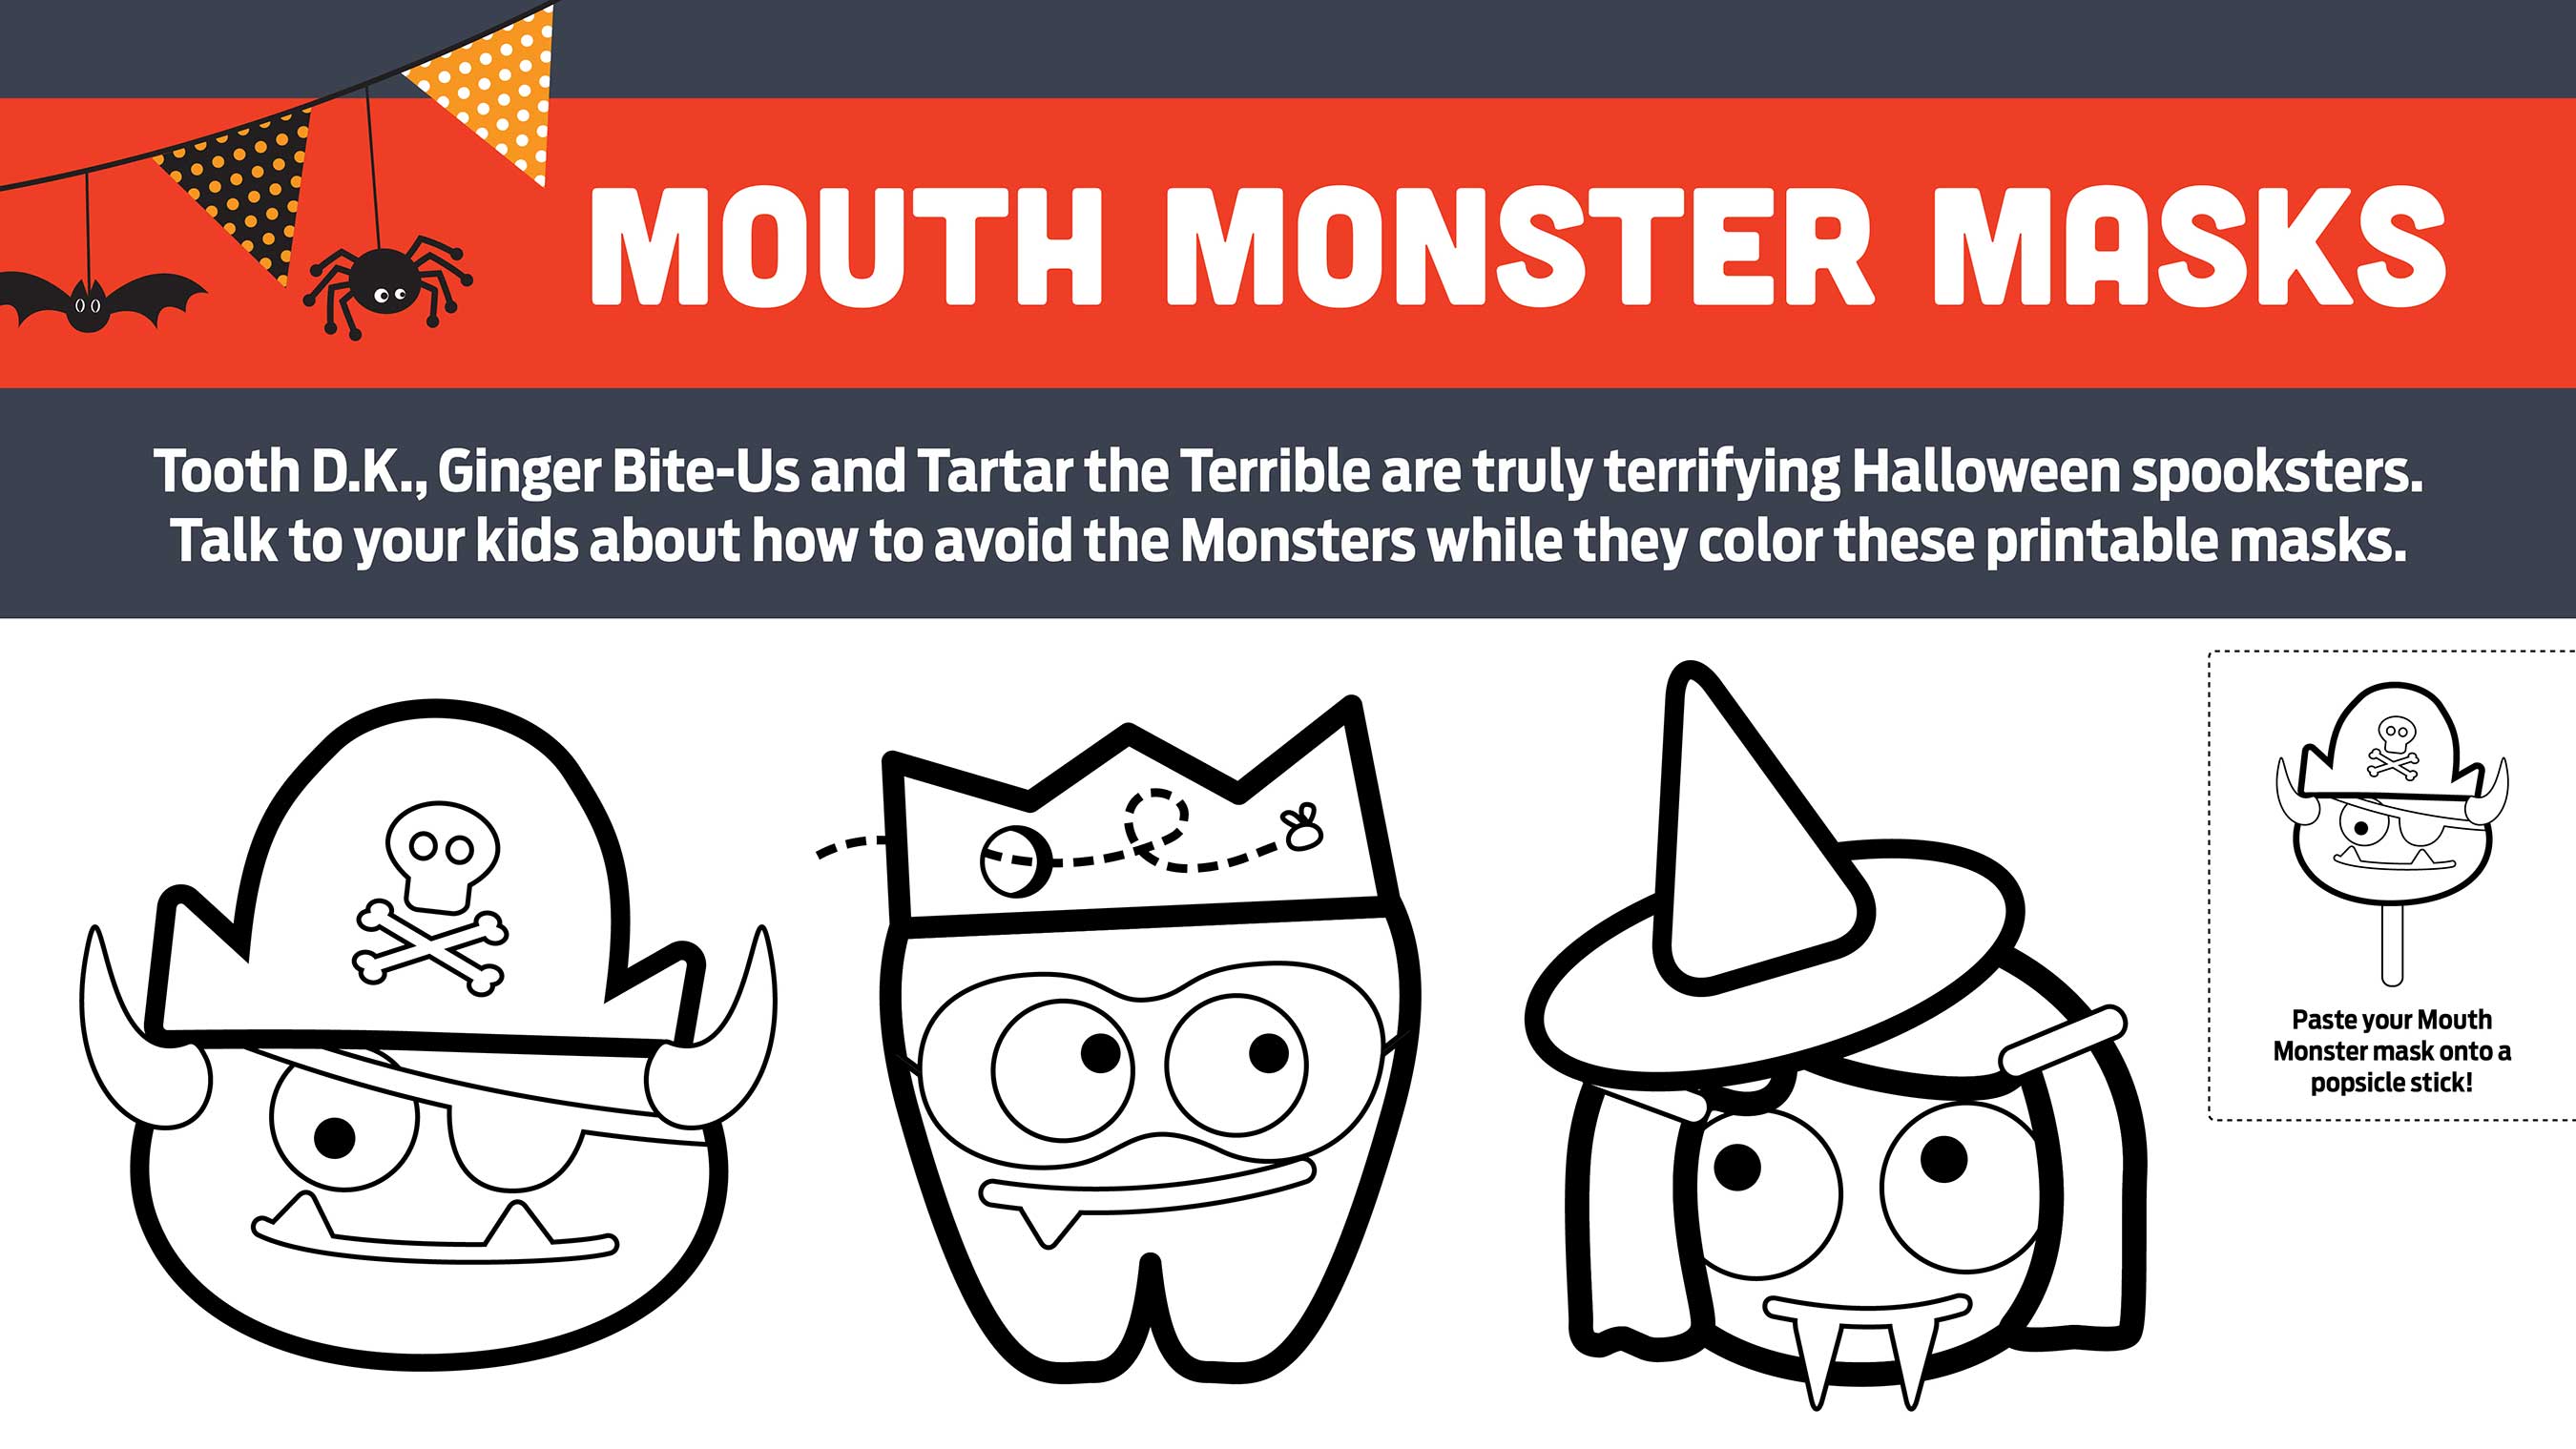 Mouth Monster Masks